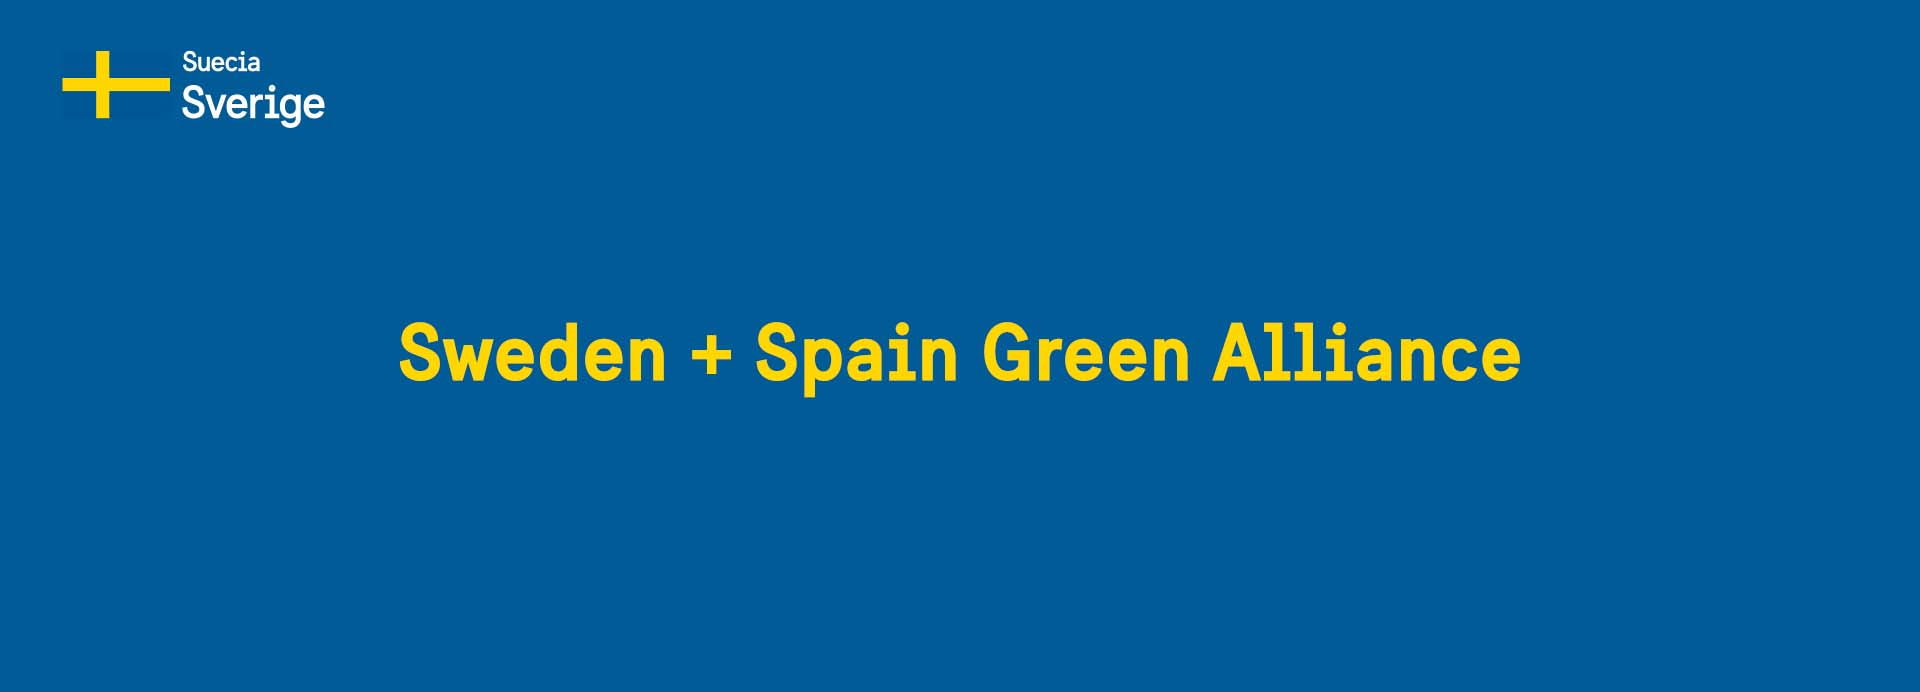 Header image for Sweden + Spain Green Alliance 